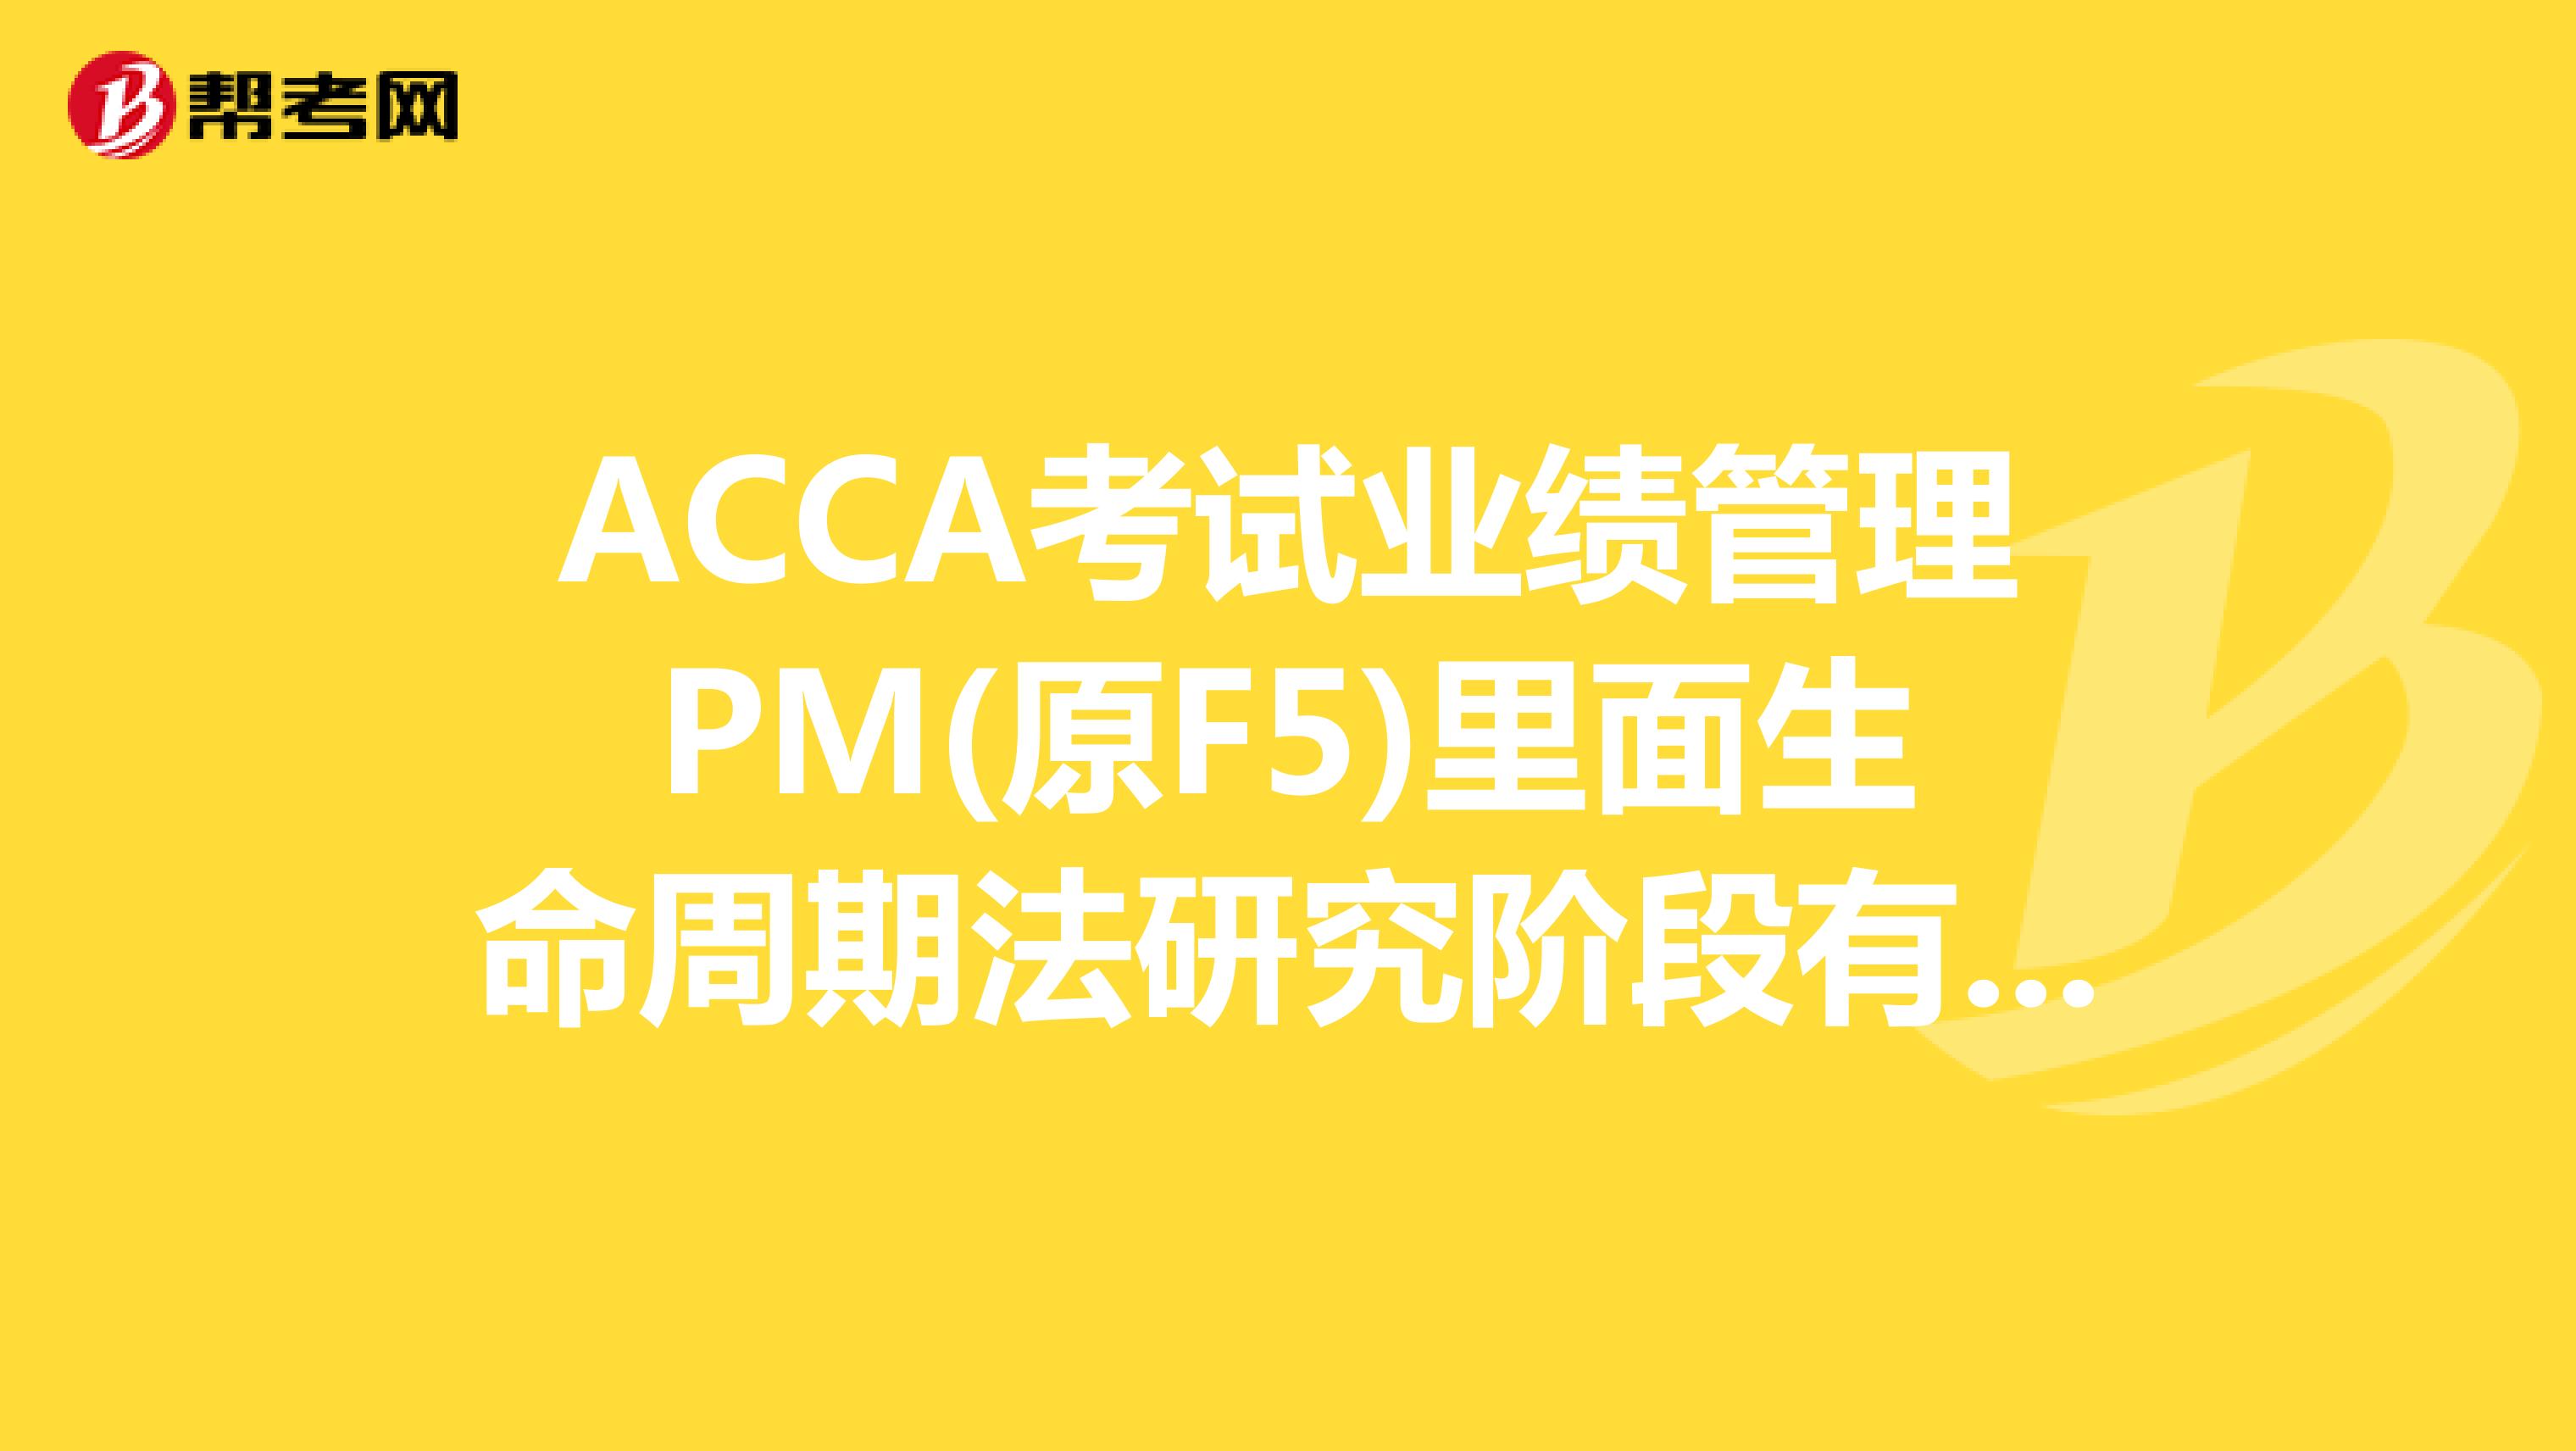 ACCA考试业绩管理PM(原F5)里面生命周期法研究阶段有几个阶段？